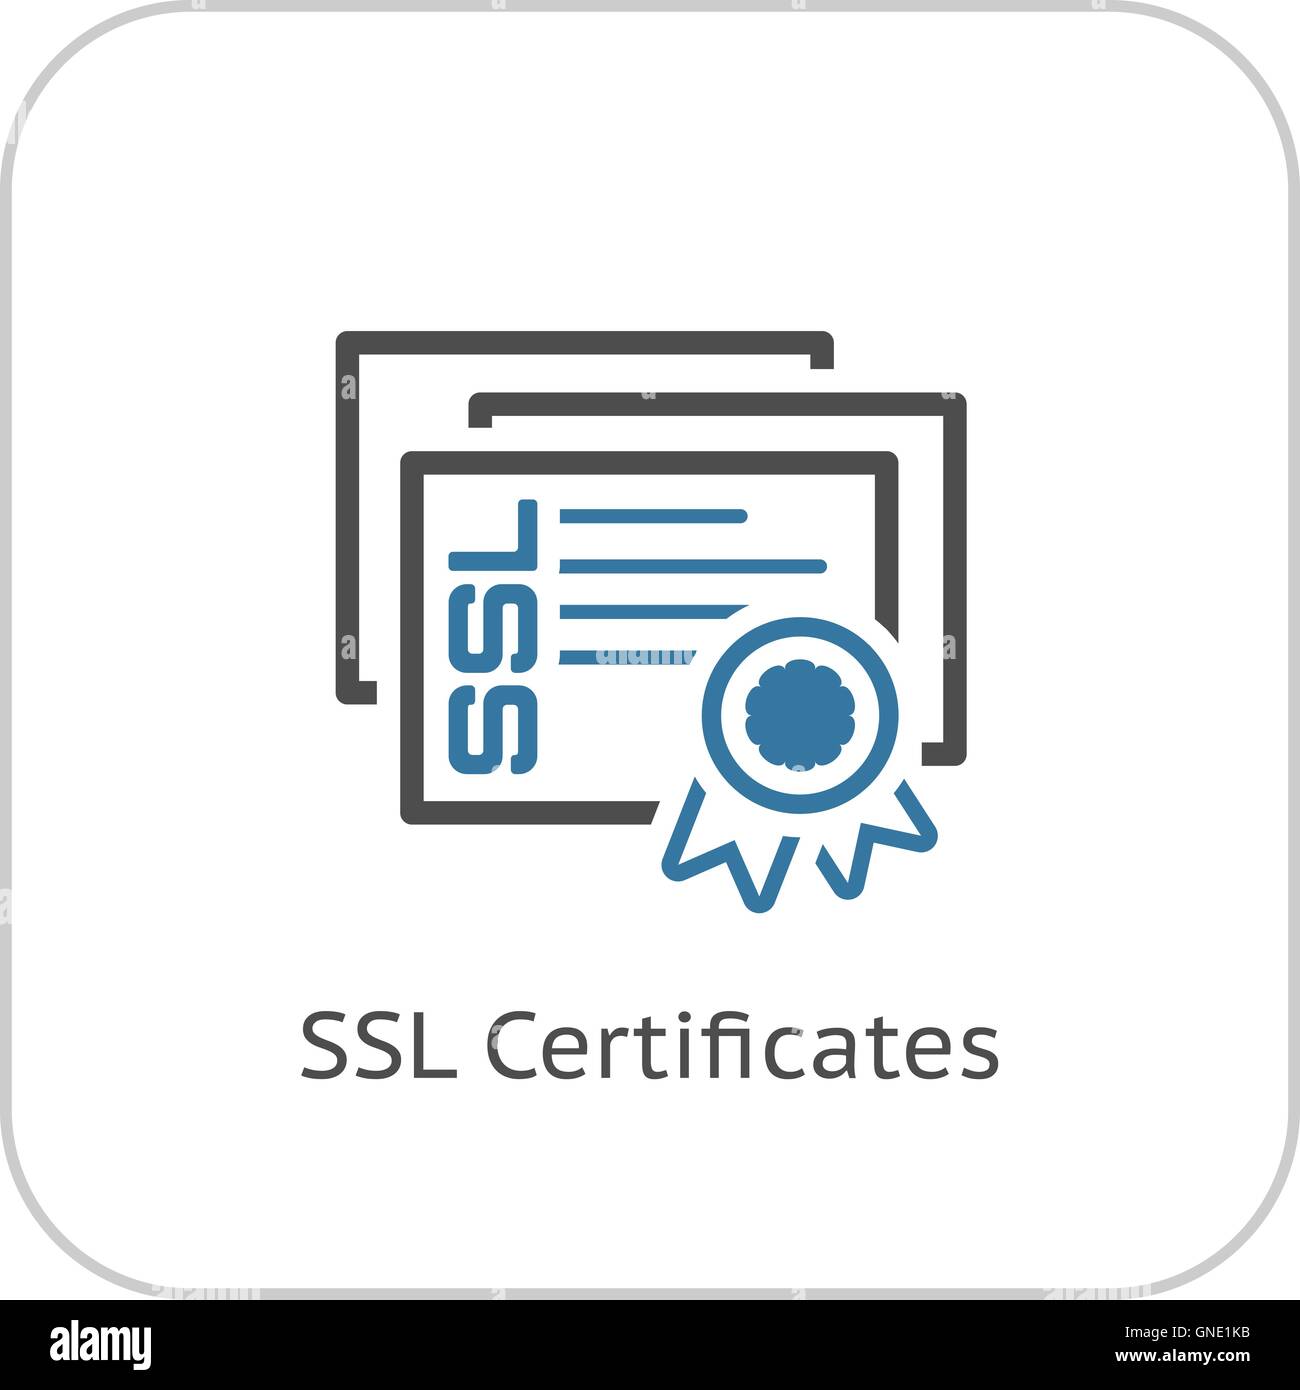 SSL Certificates Icon. Flat Design. Stock Vector